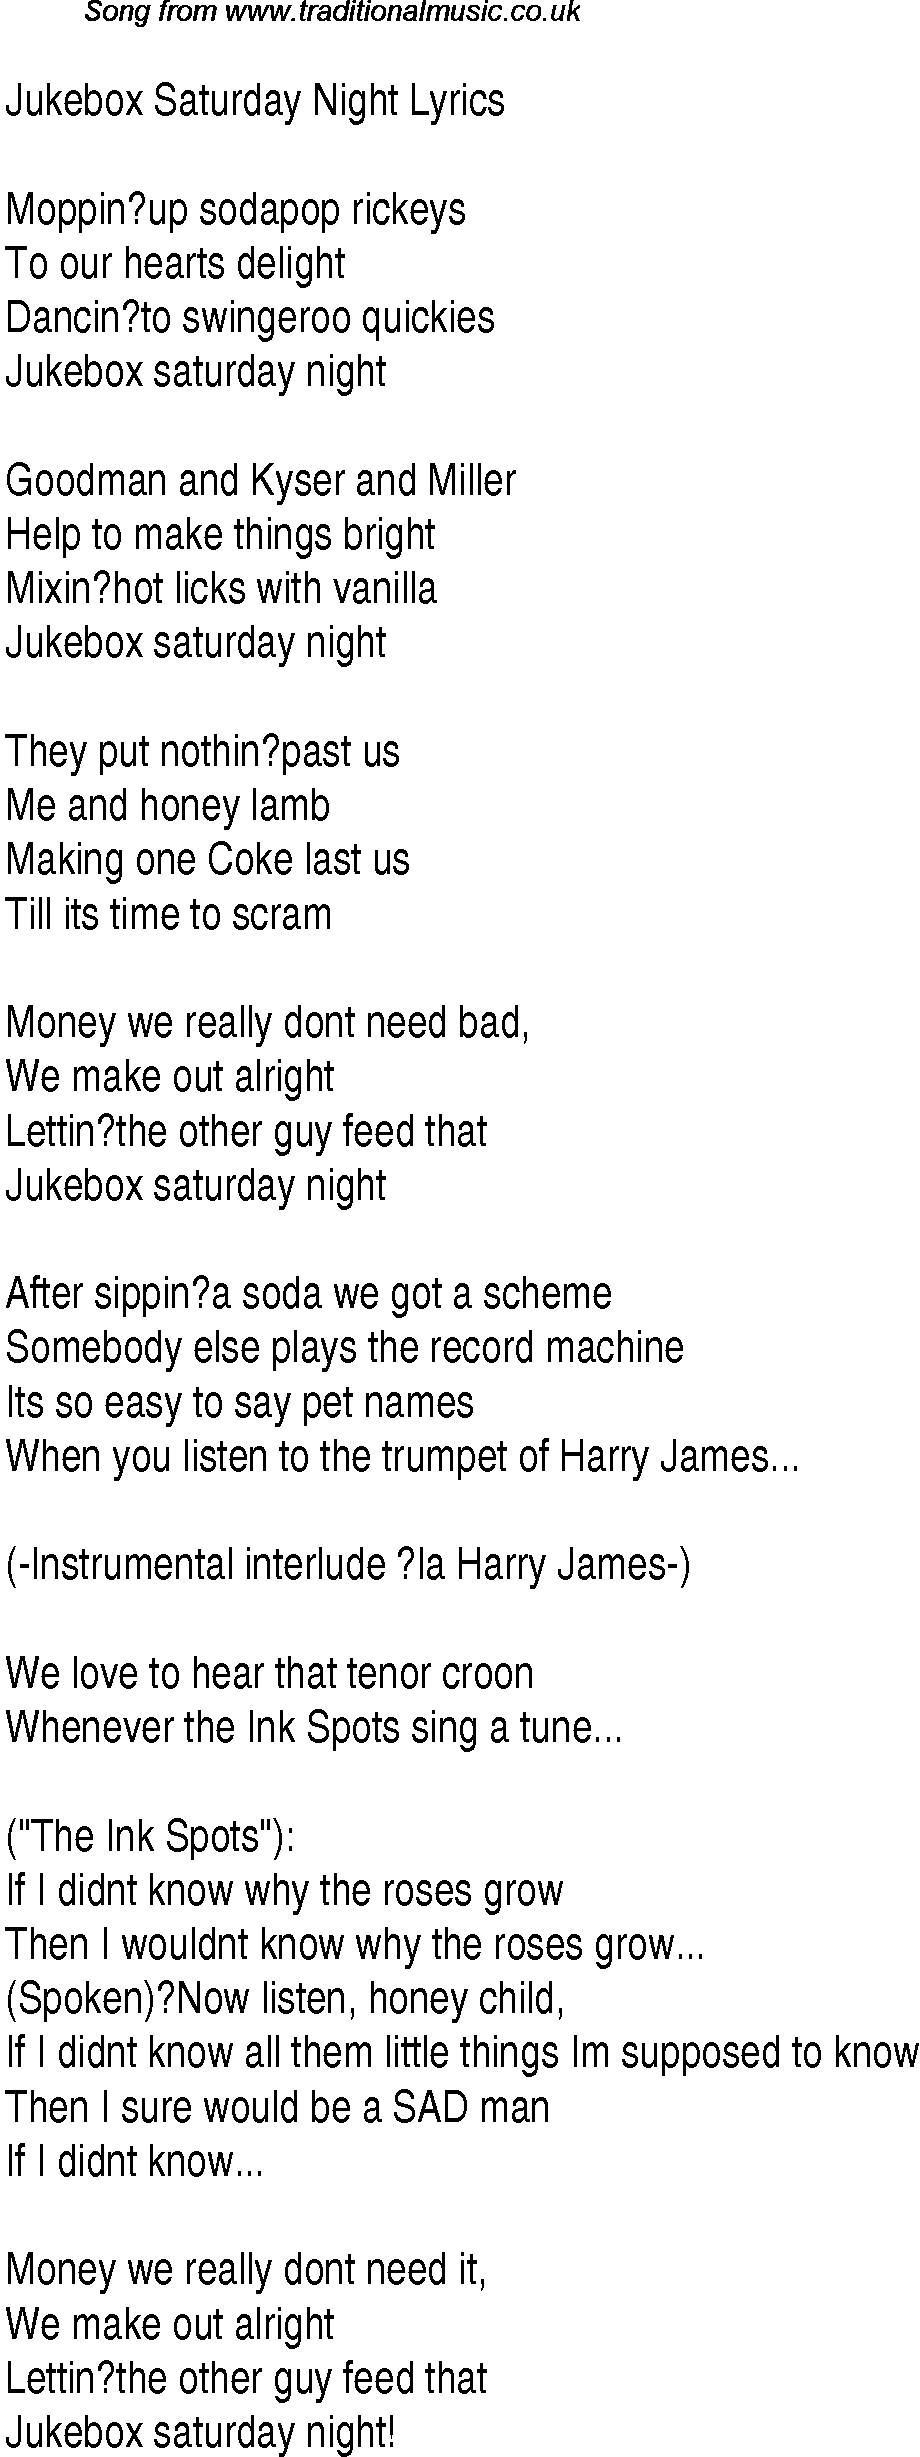 1940s top songs - lyrics for Jukebox Saturday Night(Glen Miller)